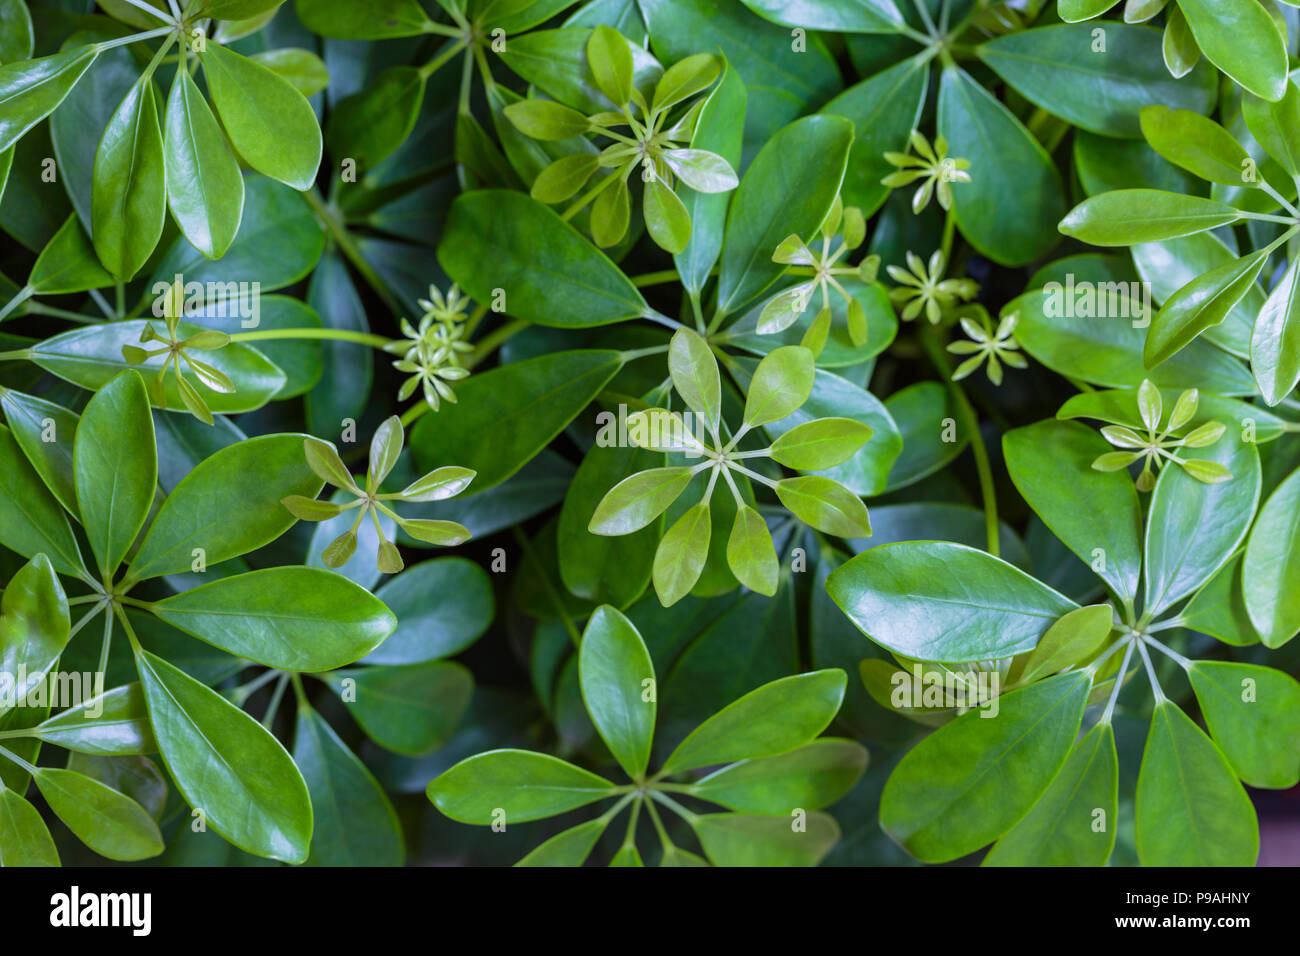 Dwarf Umbrella, Schefflera actinophylla ornamental plants Background Pattern, Vertical Green Leaves Textured or Green Bush Background. Stock Photo